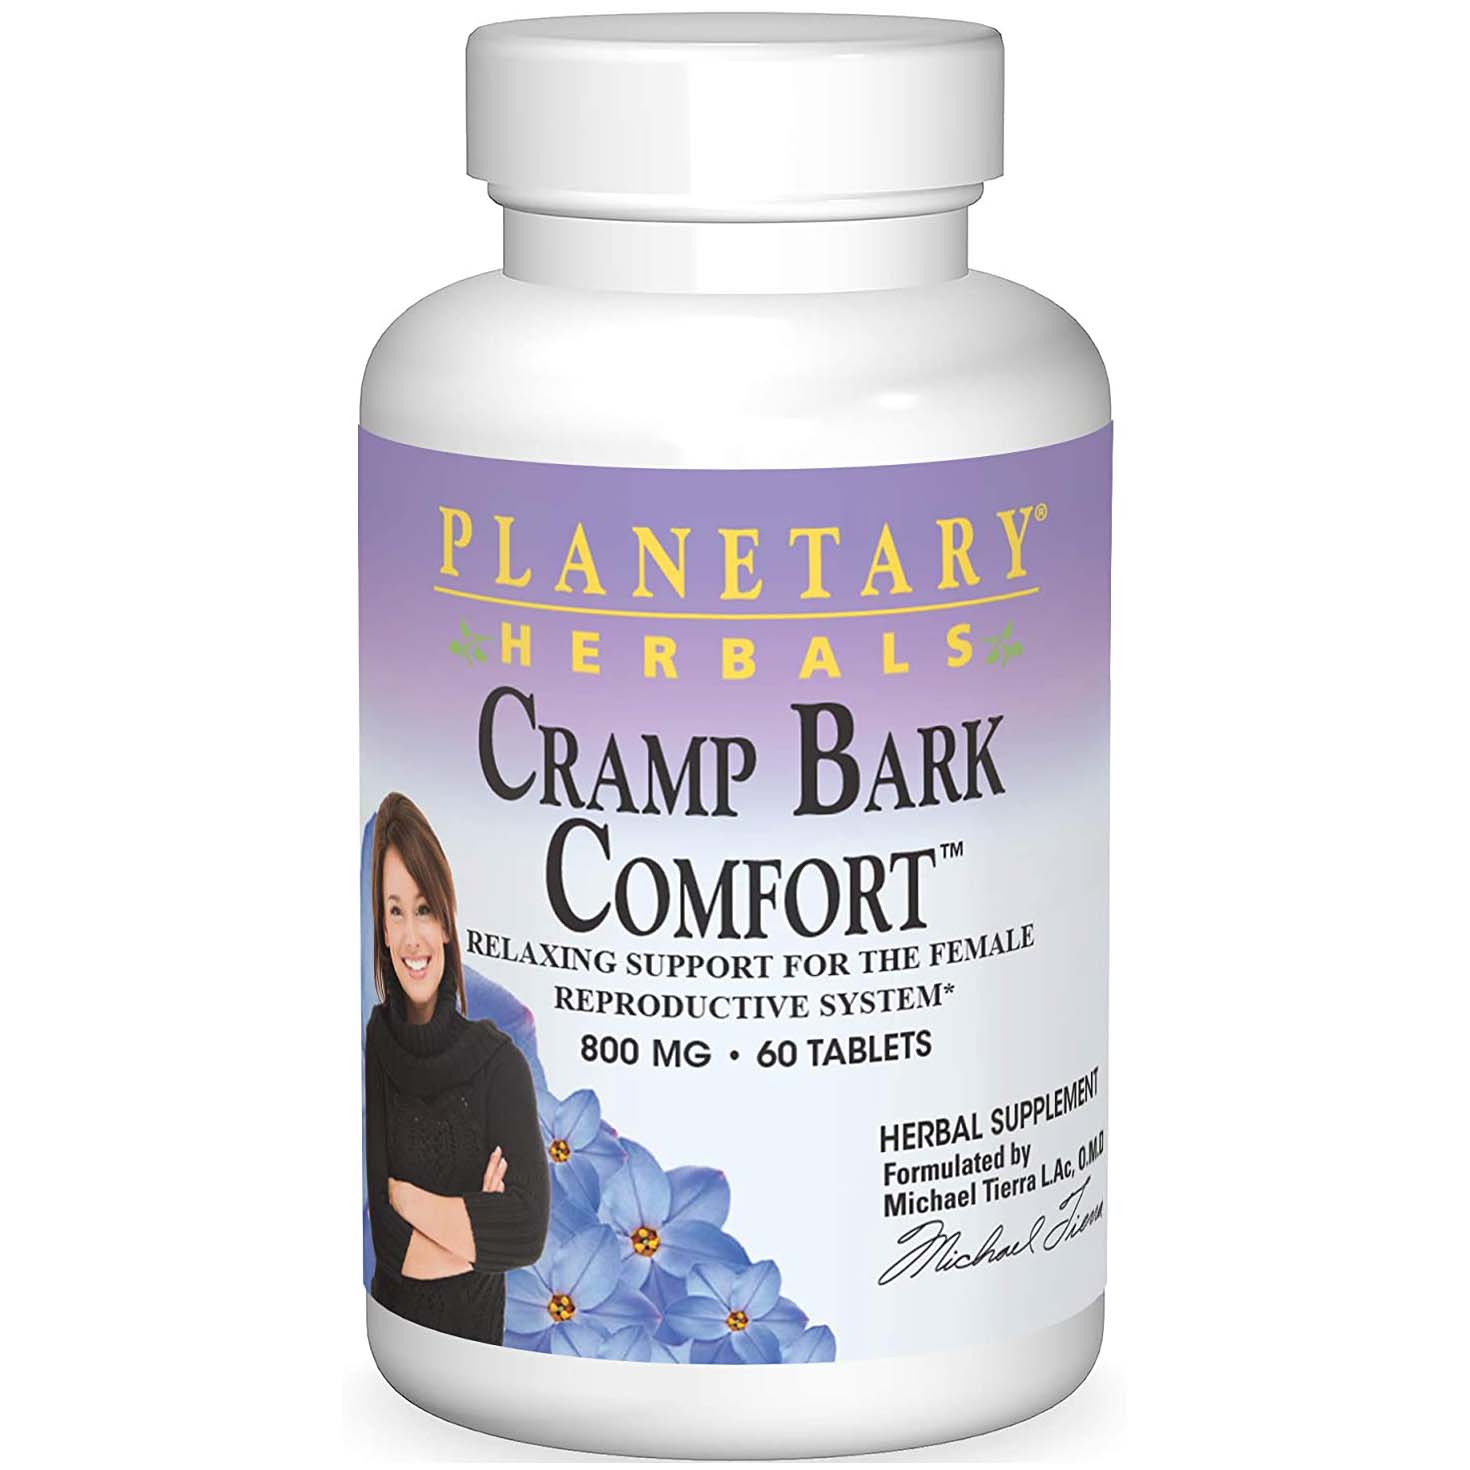 Planetary Herbals Cramp Bark Comfort 60 Tablets 800 mg